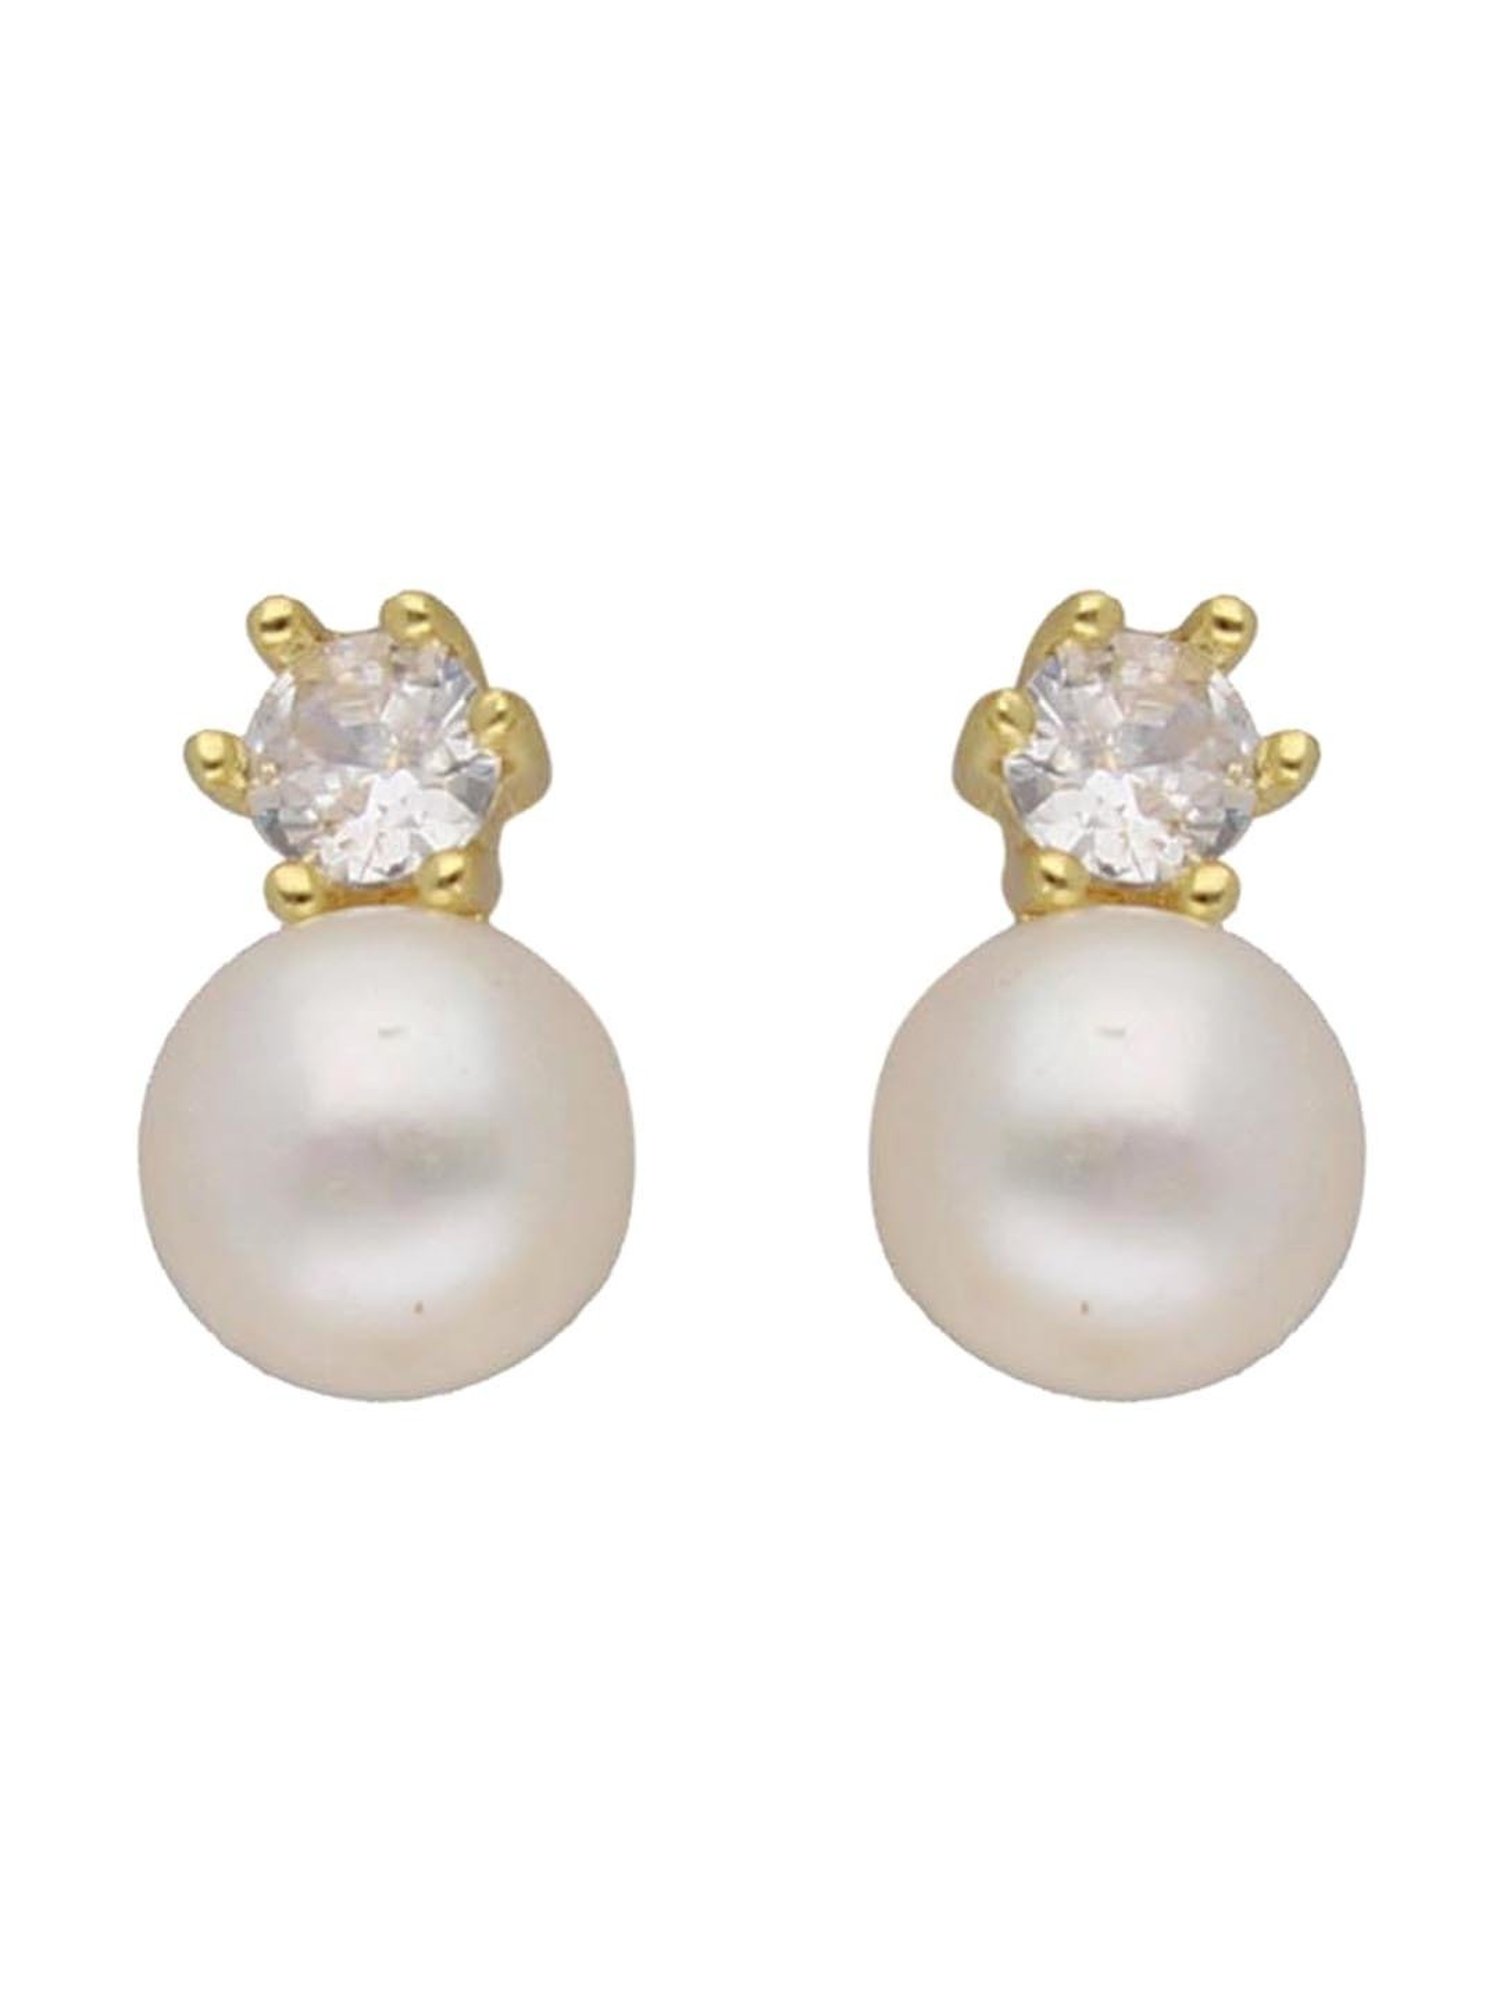 Carlton London Gold Plated White Pearl Stud Earring For Women  Carlton  London Online